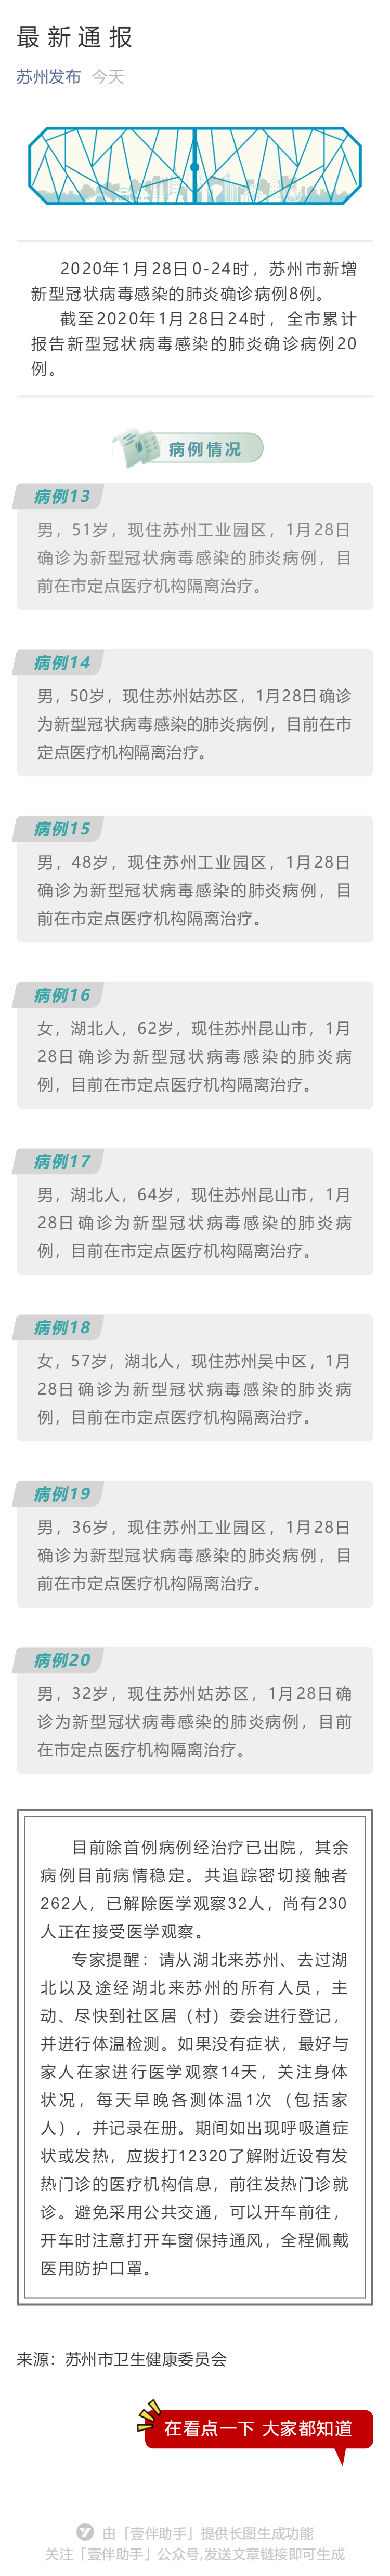 20200129_1547_yiban_screenshot.png